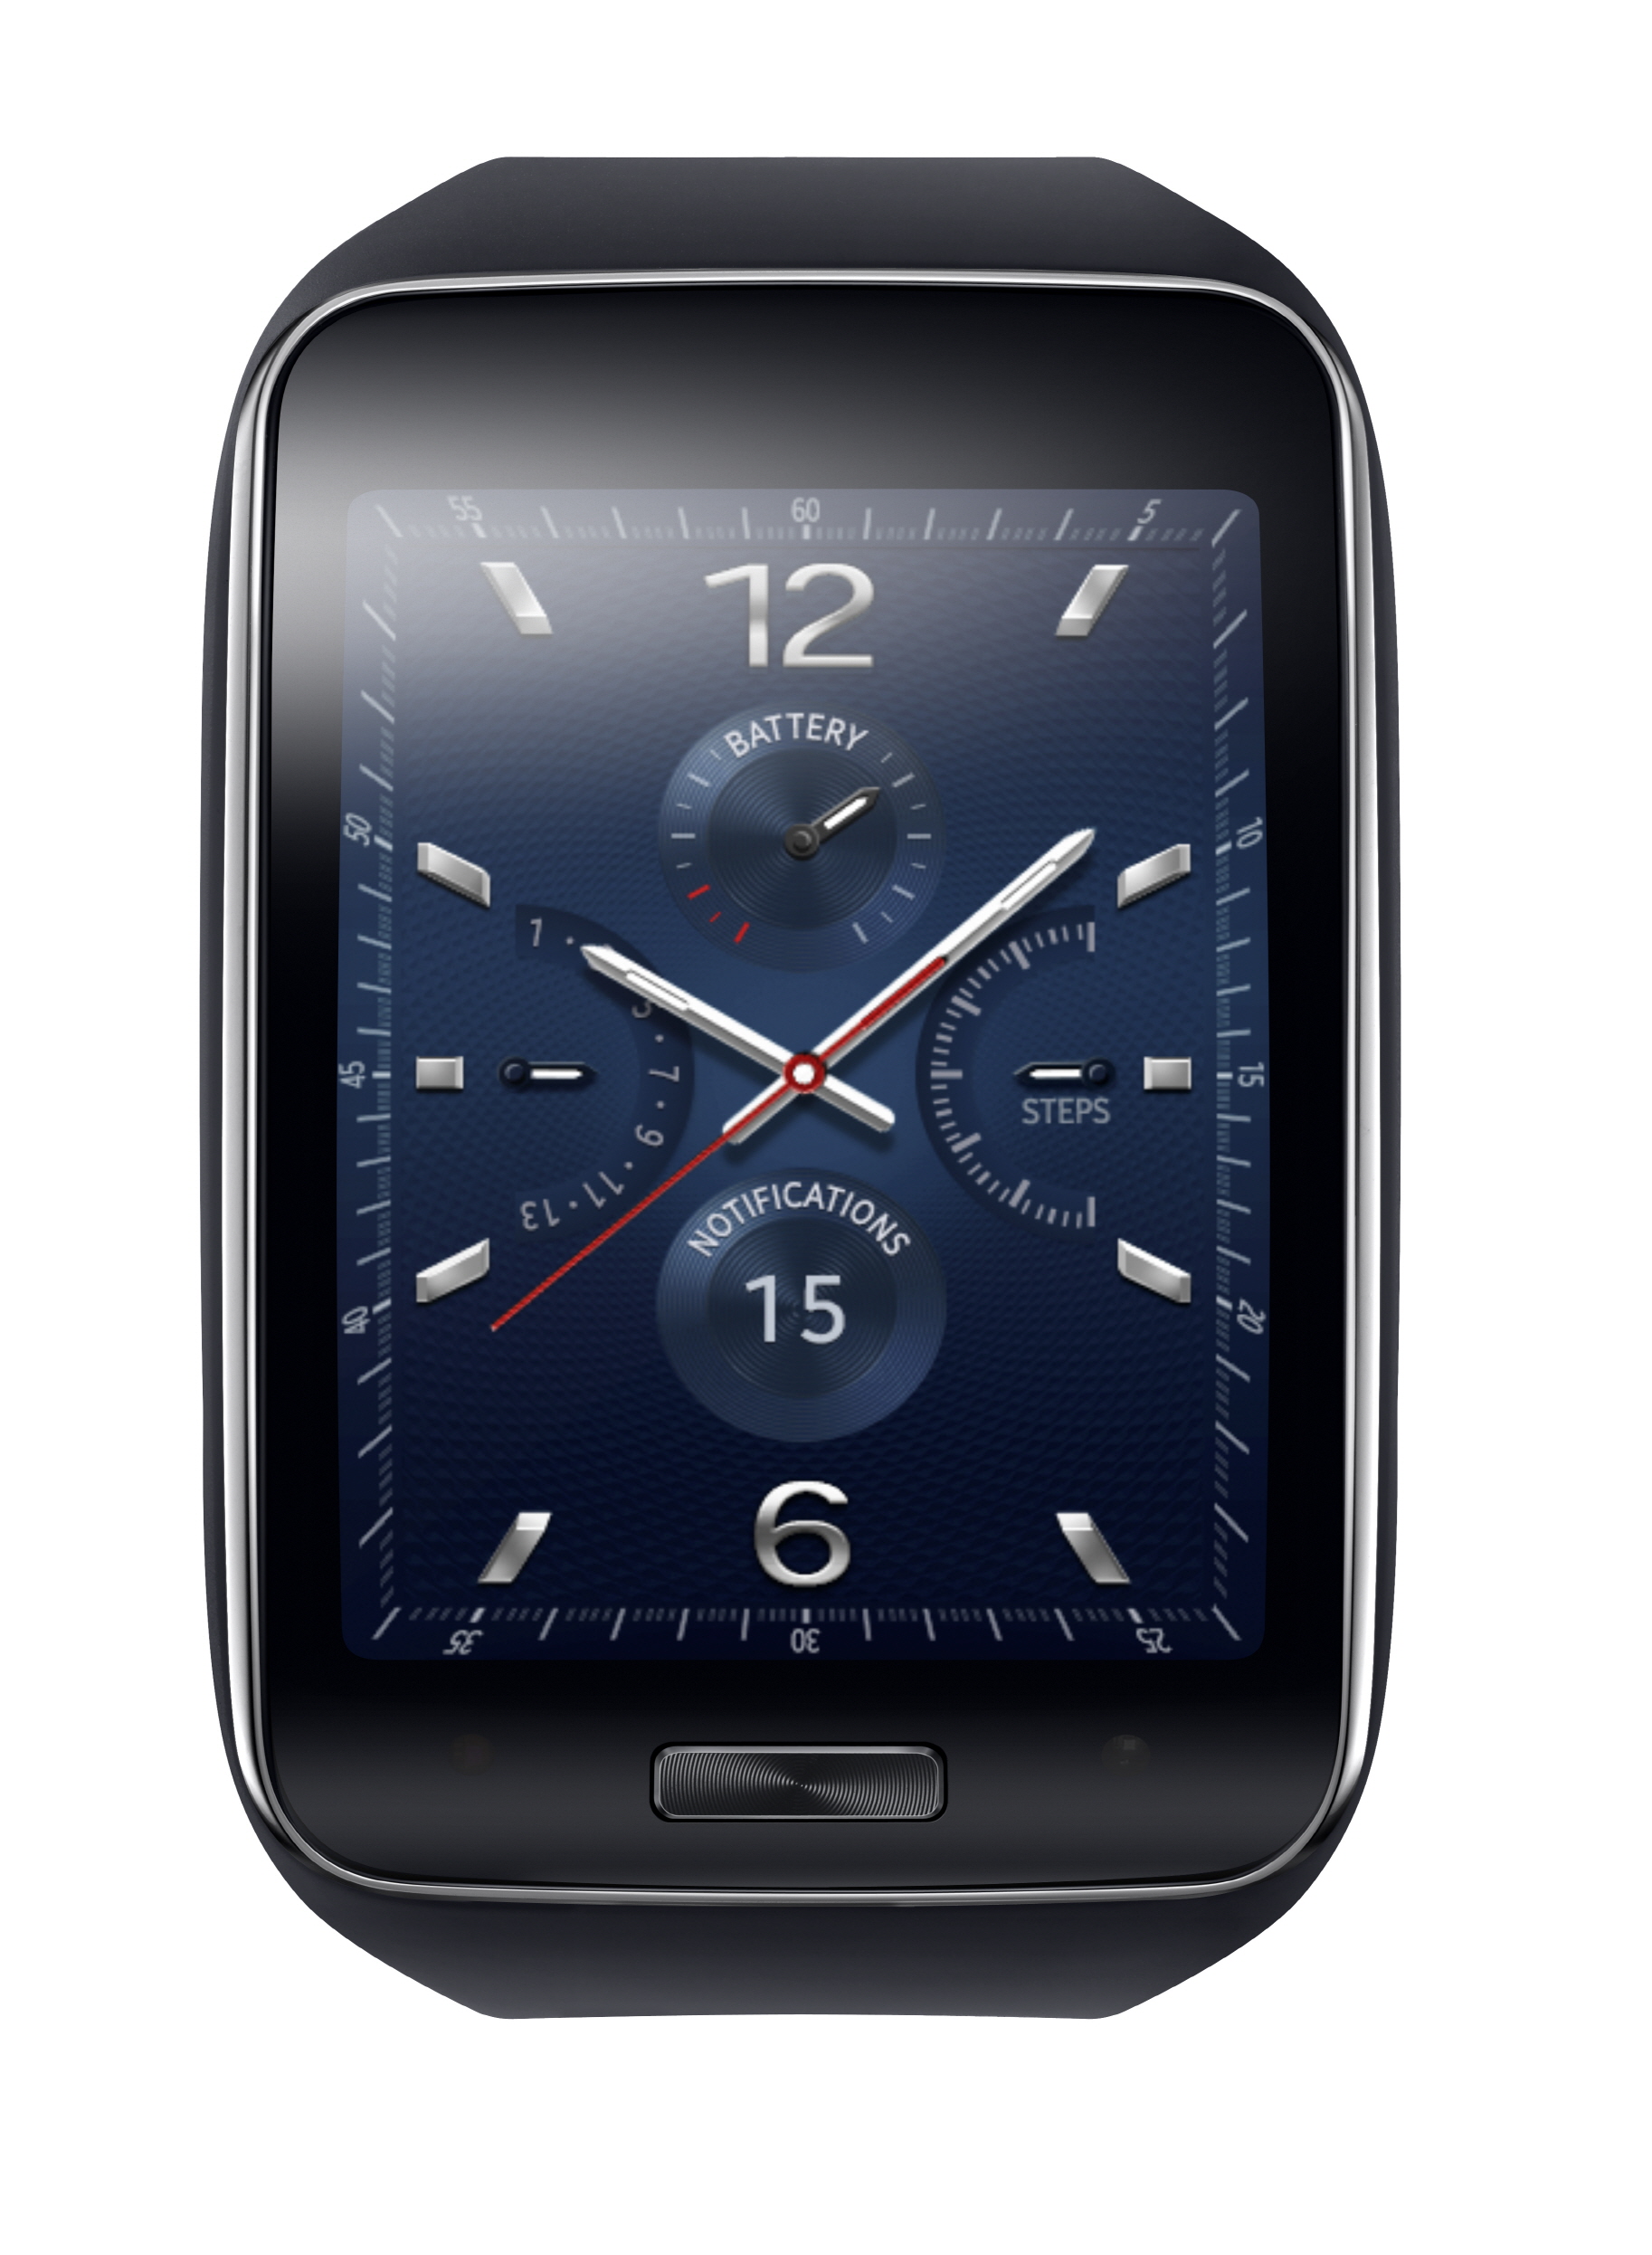 Samsung estaría trabajando en un reloj inteligente con tarjeta SIM -  RedUSERS